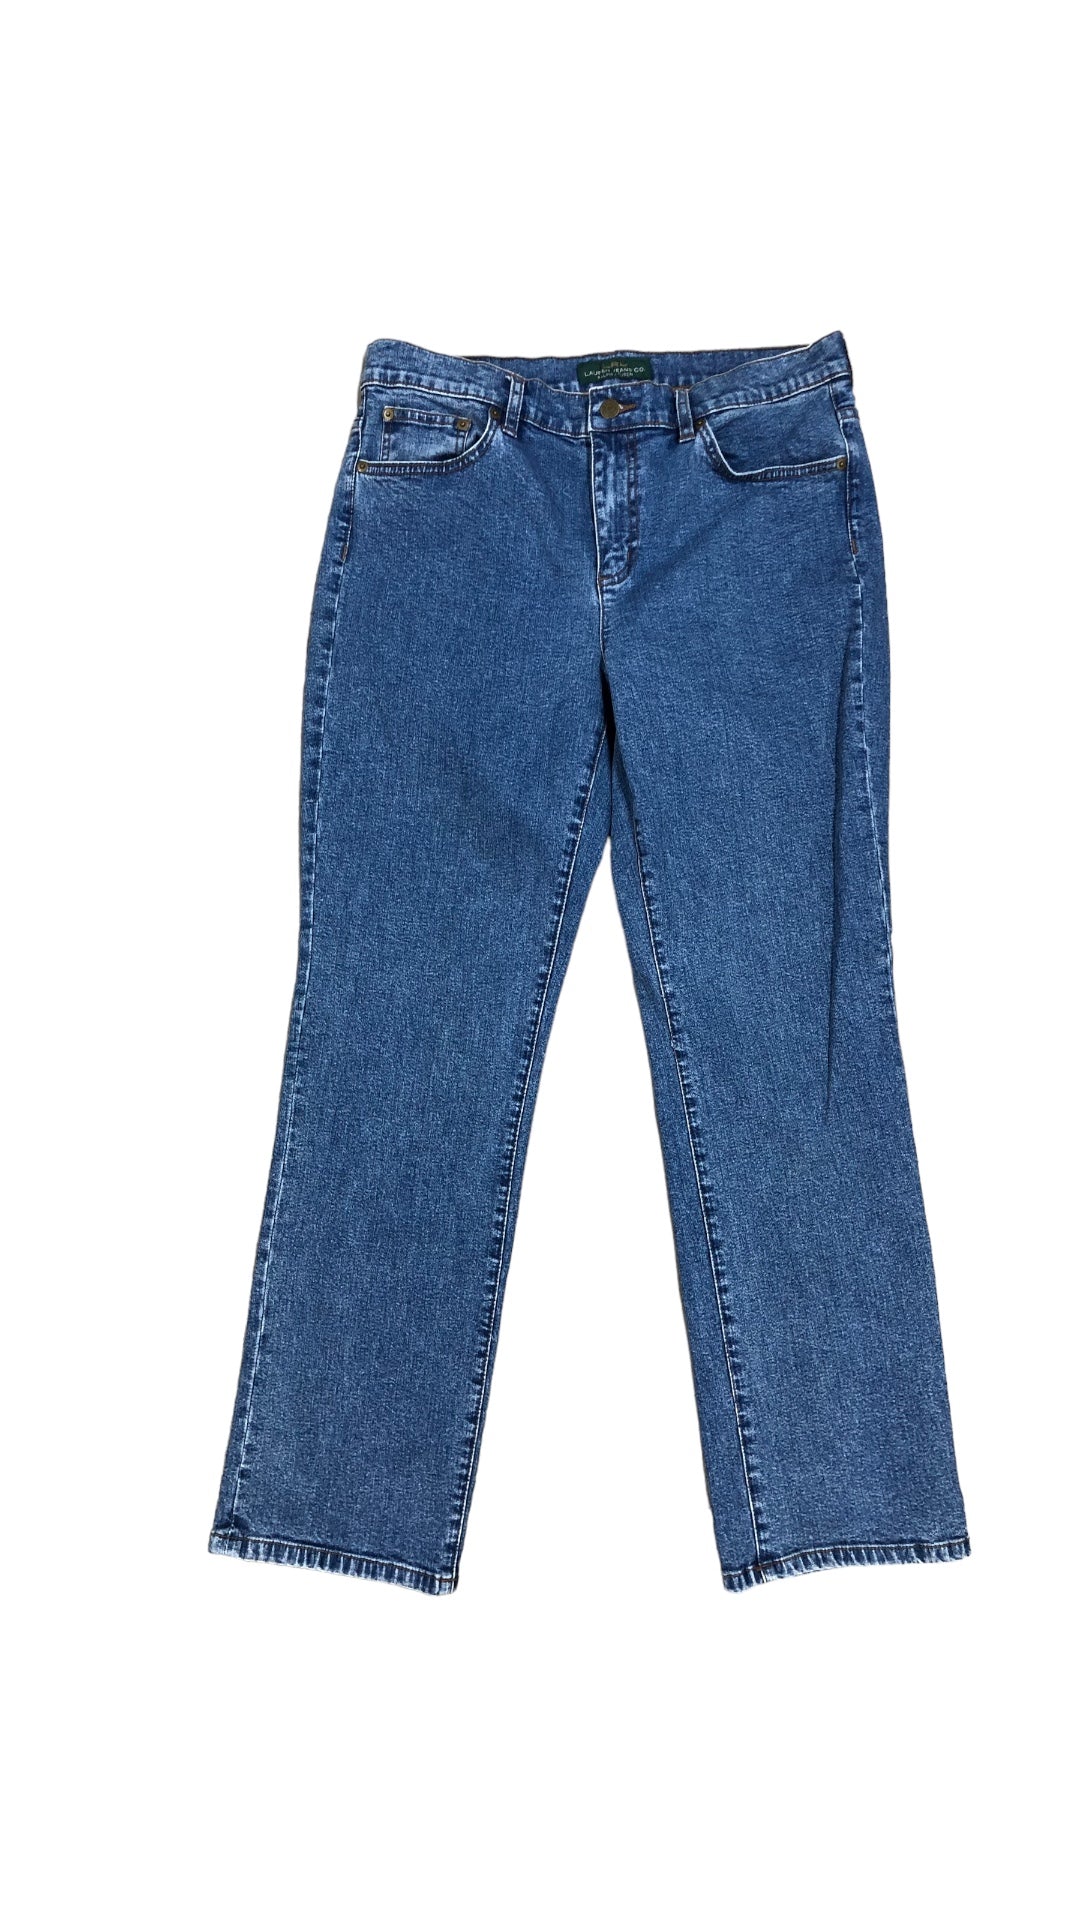 VTG Ralph Lauren Jeans Sz 32x30